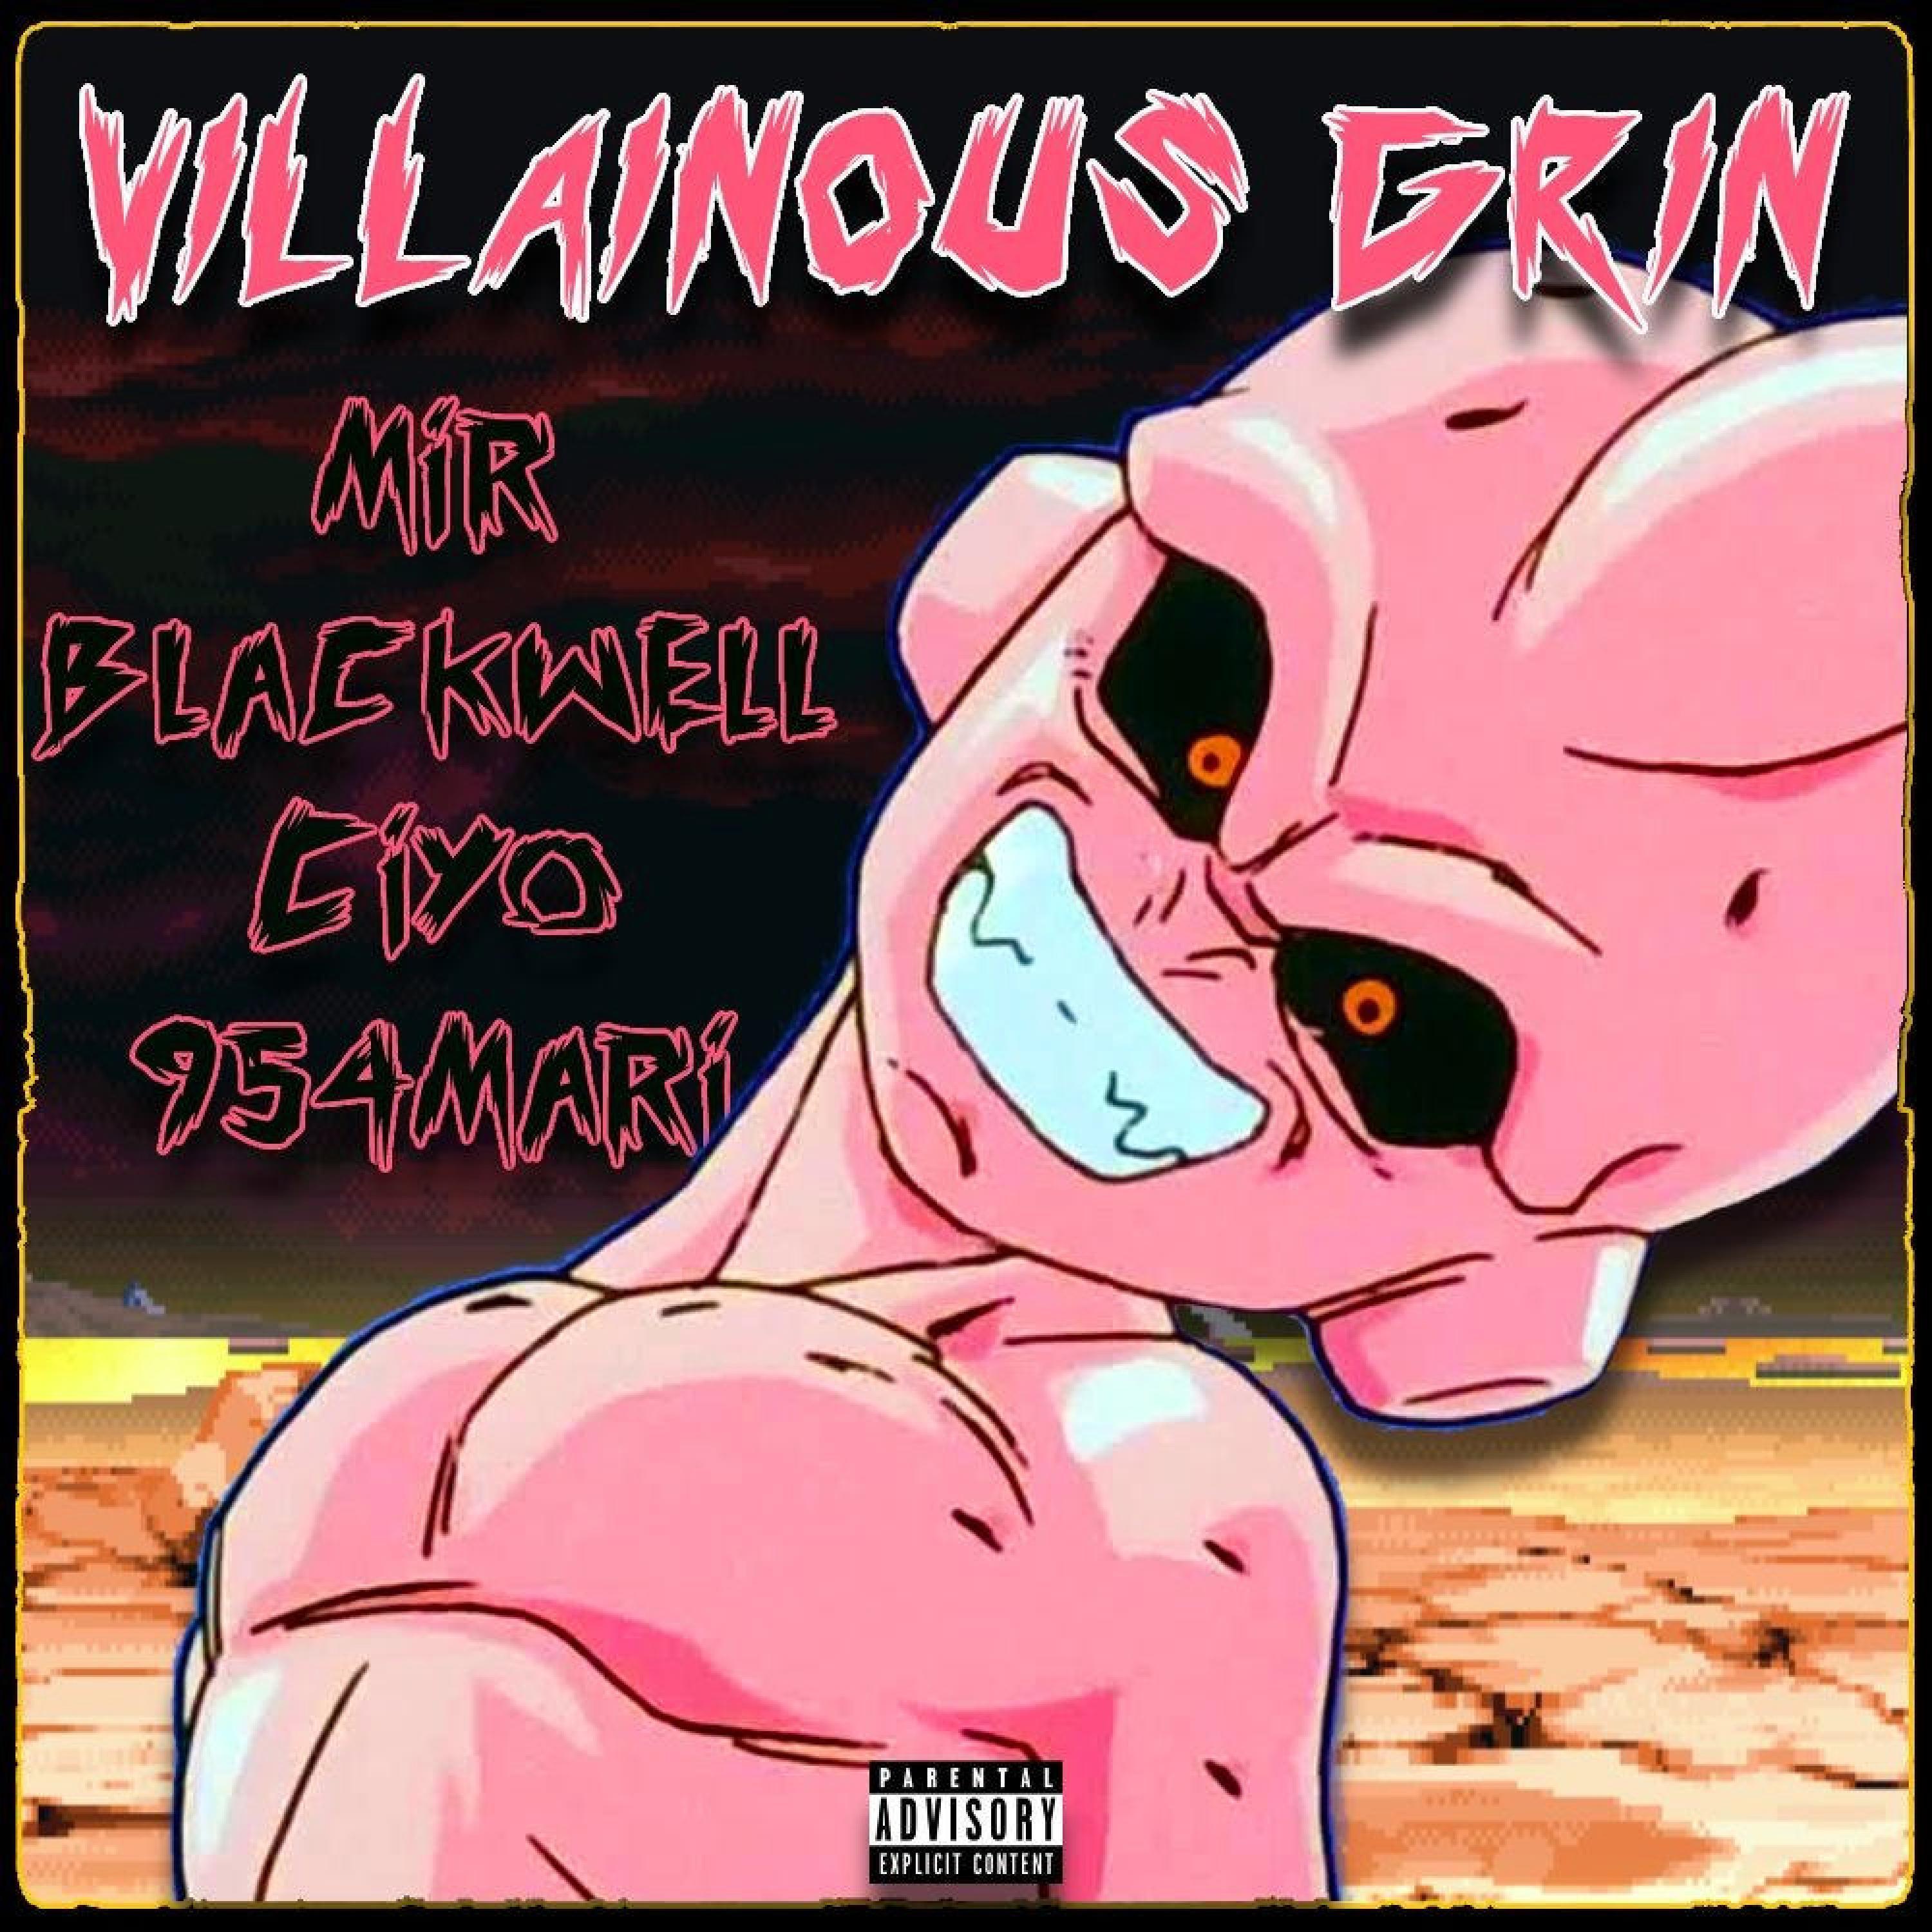 Mir Blackwell - Villainous Grin (feat. Ciyo & 954mari)